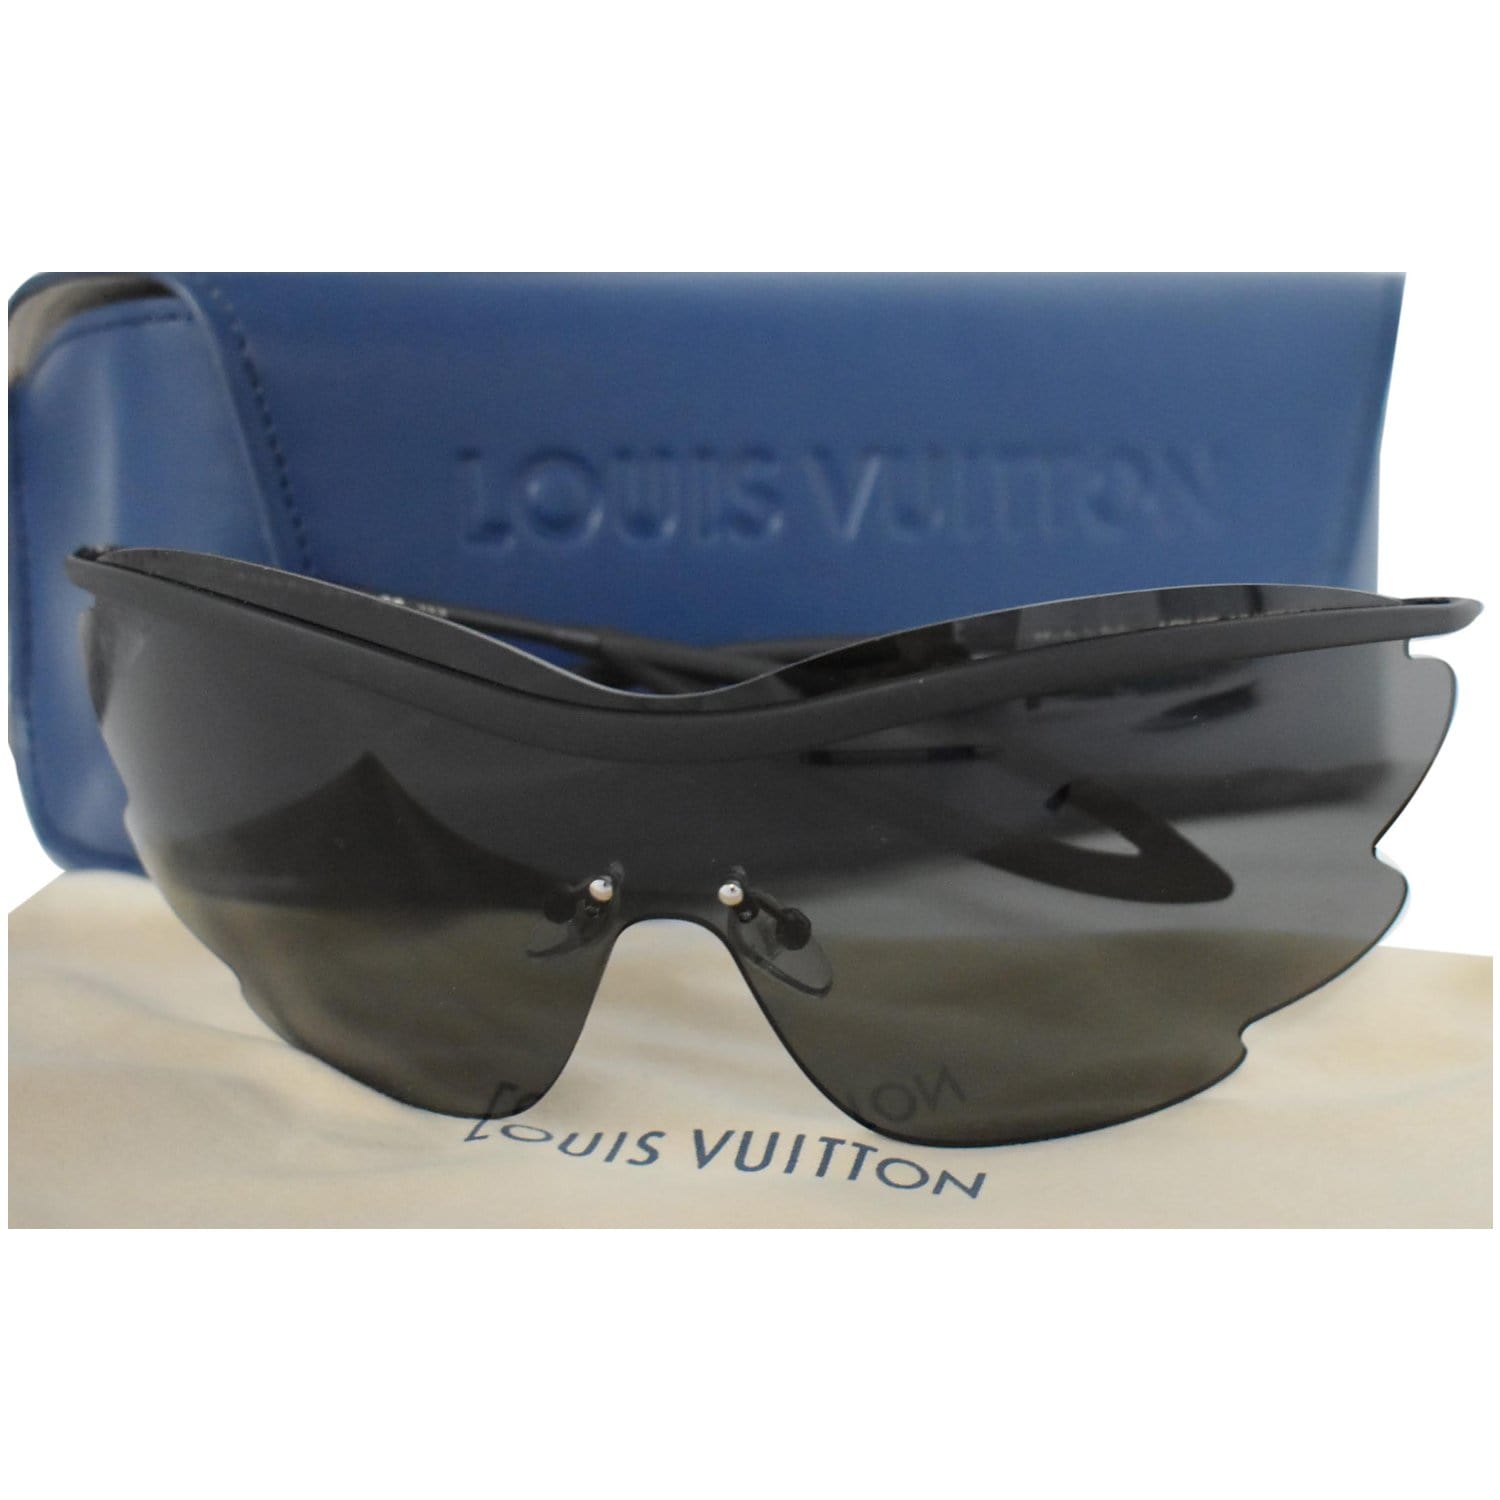 LOUIS VUITTON LV Monogram Mask Sunglasses Black Acetate. Size E